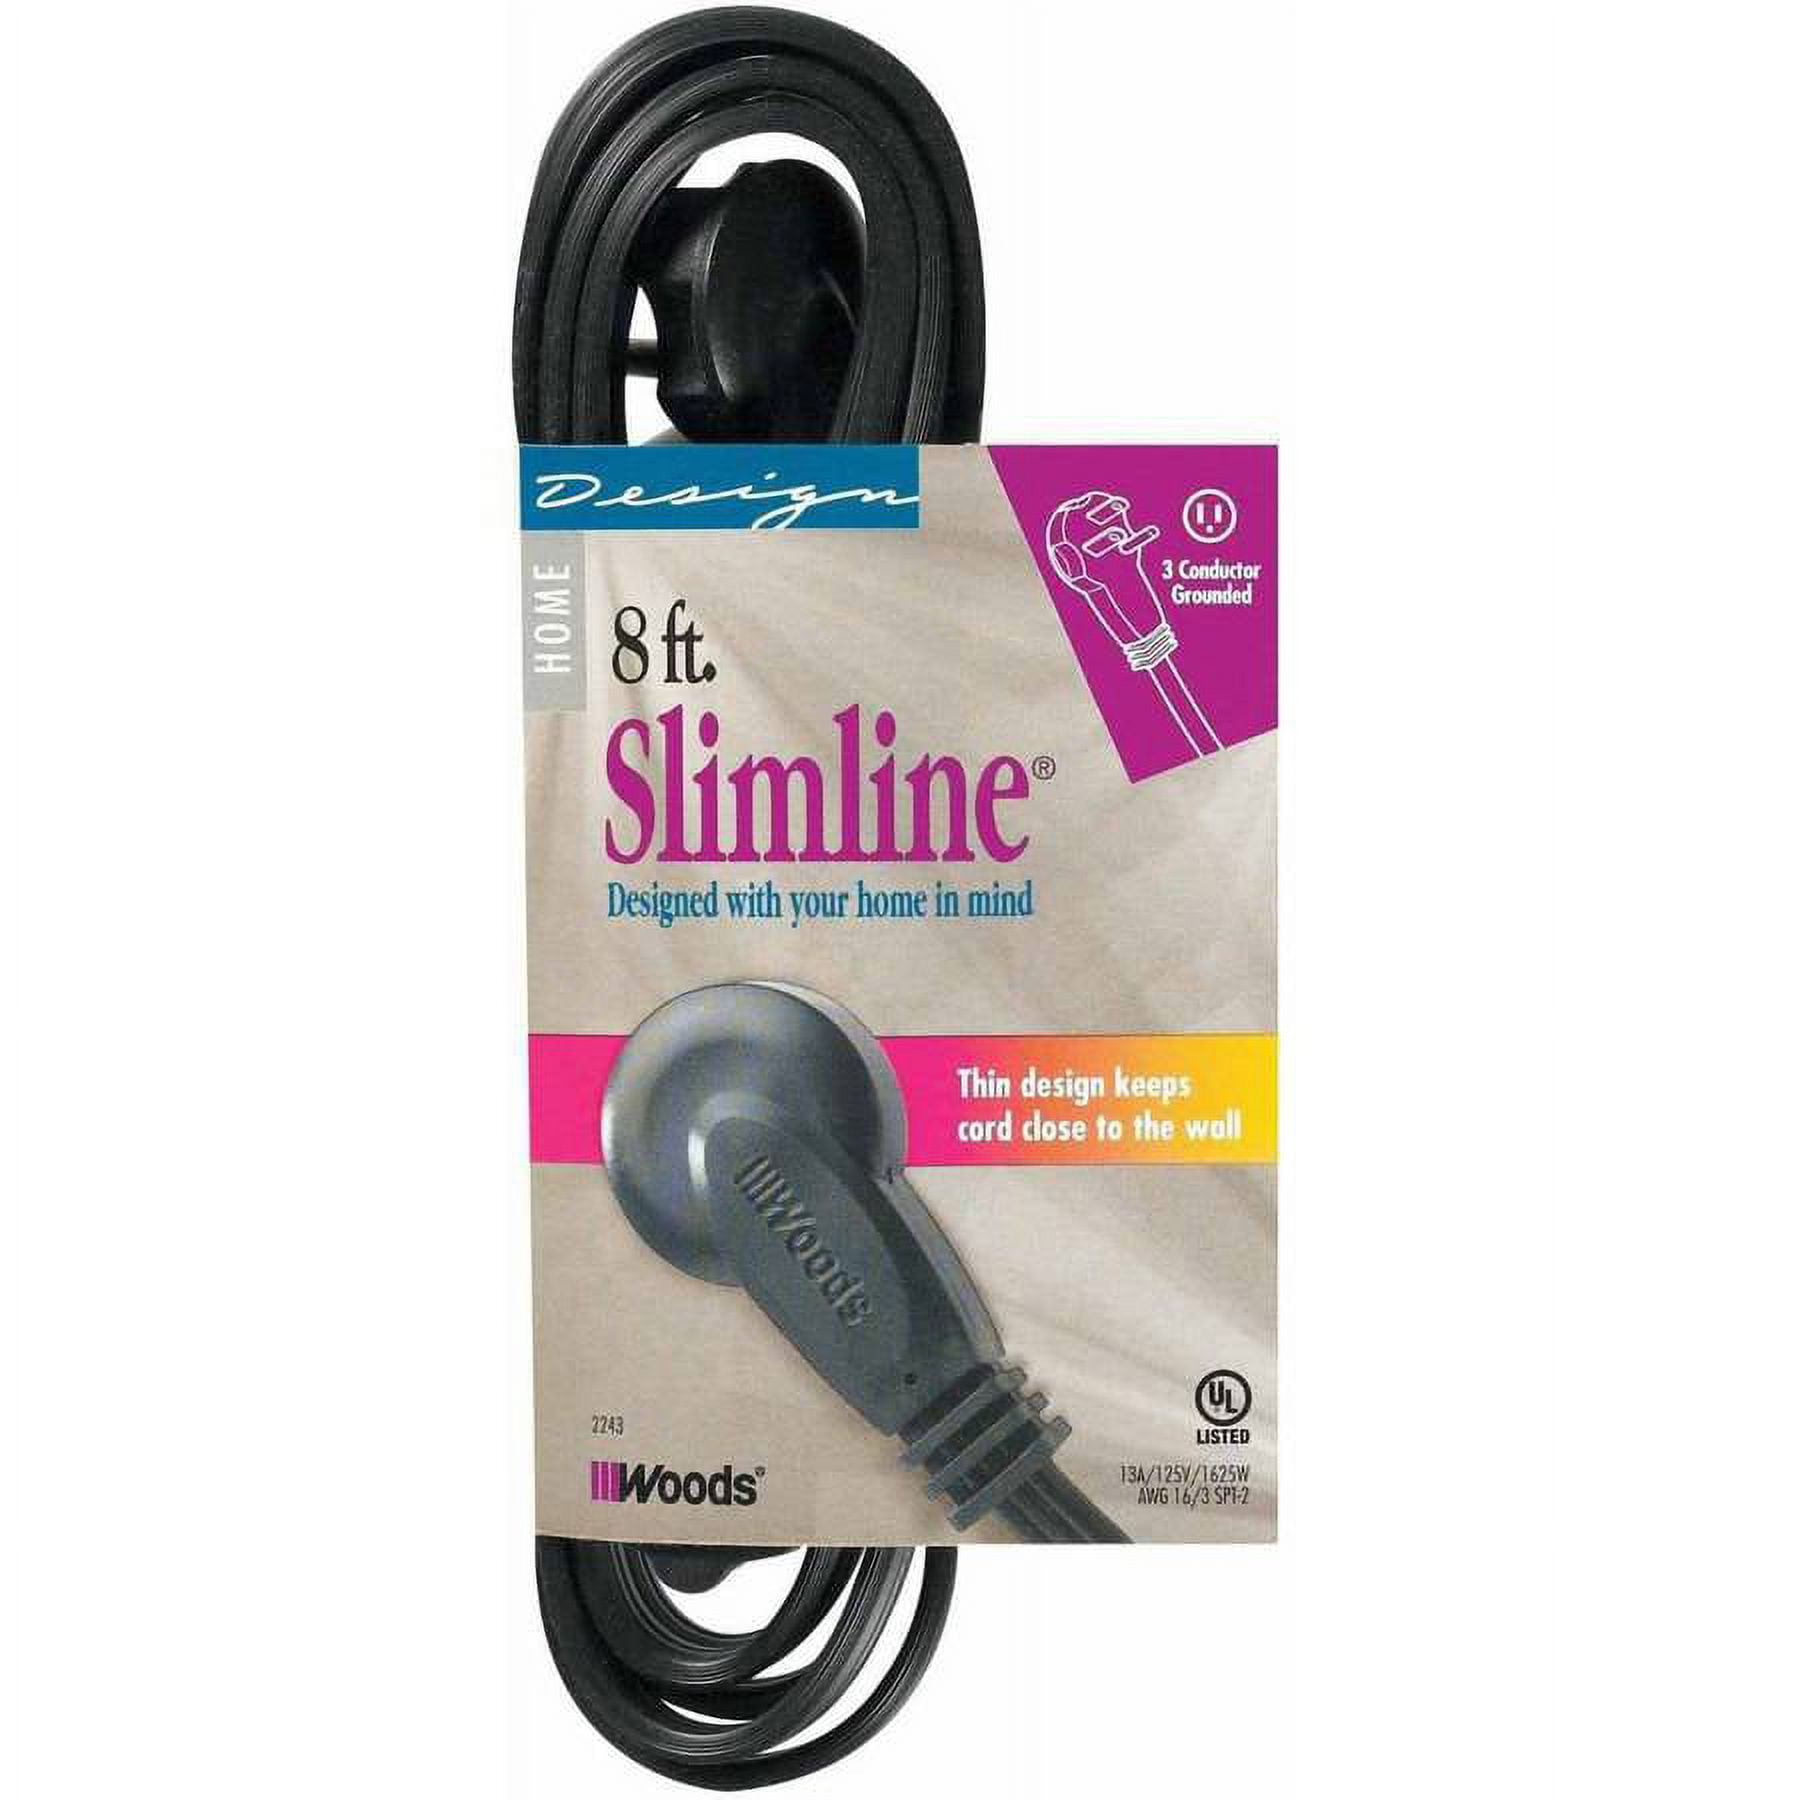 SlimLine 2255 Flat Plug Extension Cord, 3-Wire, 13-Foot, Beige